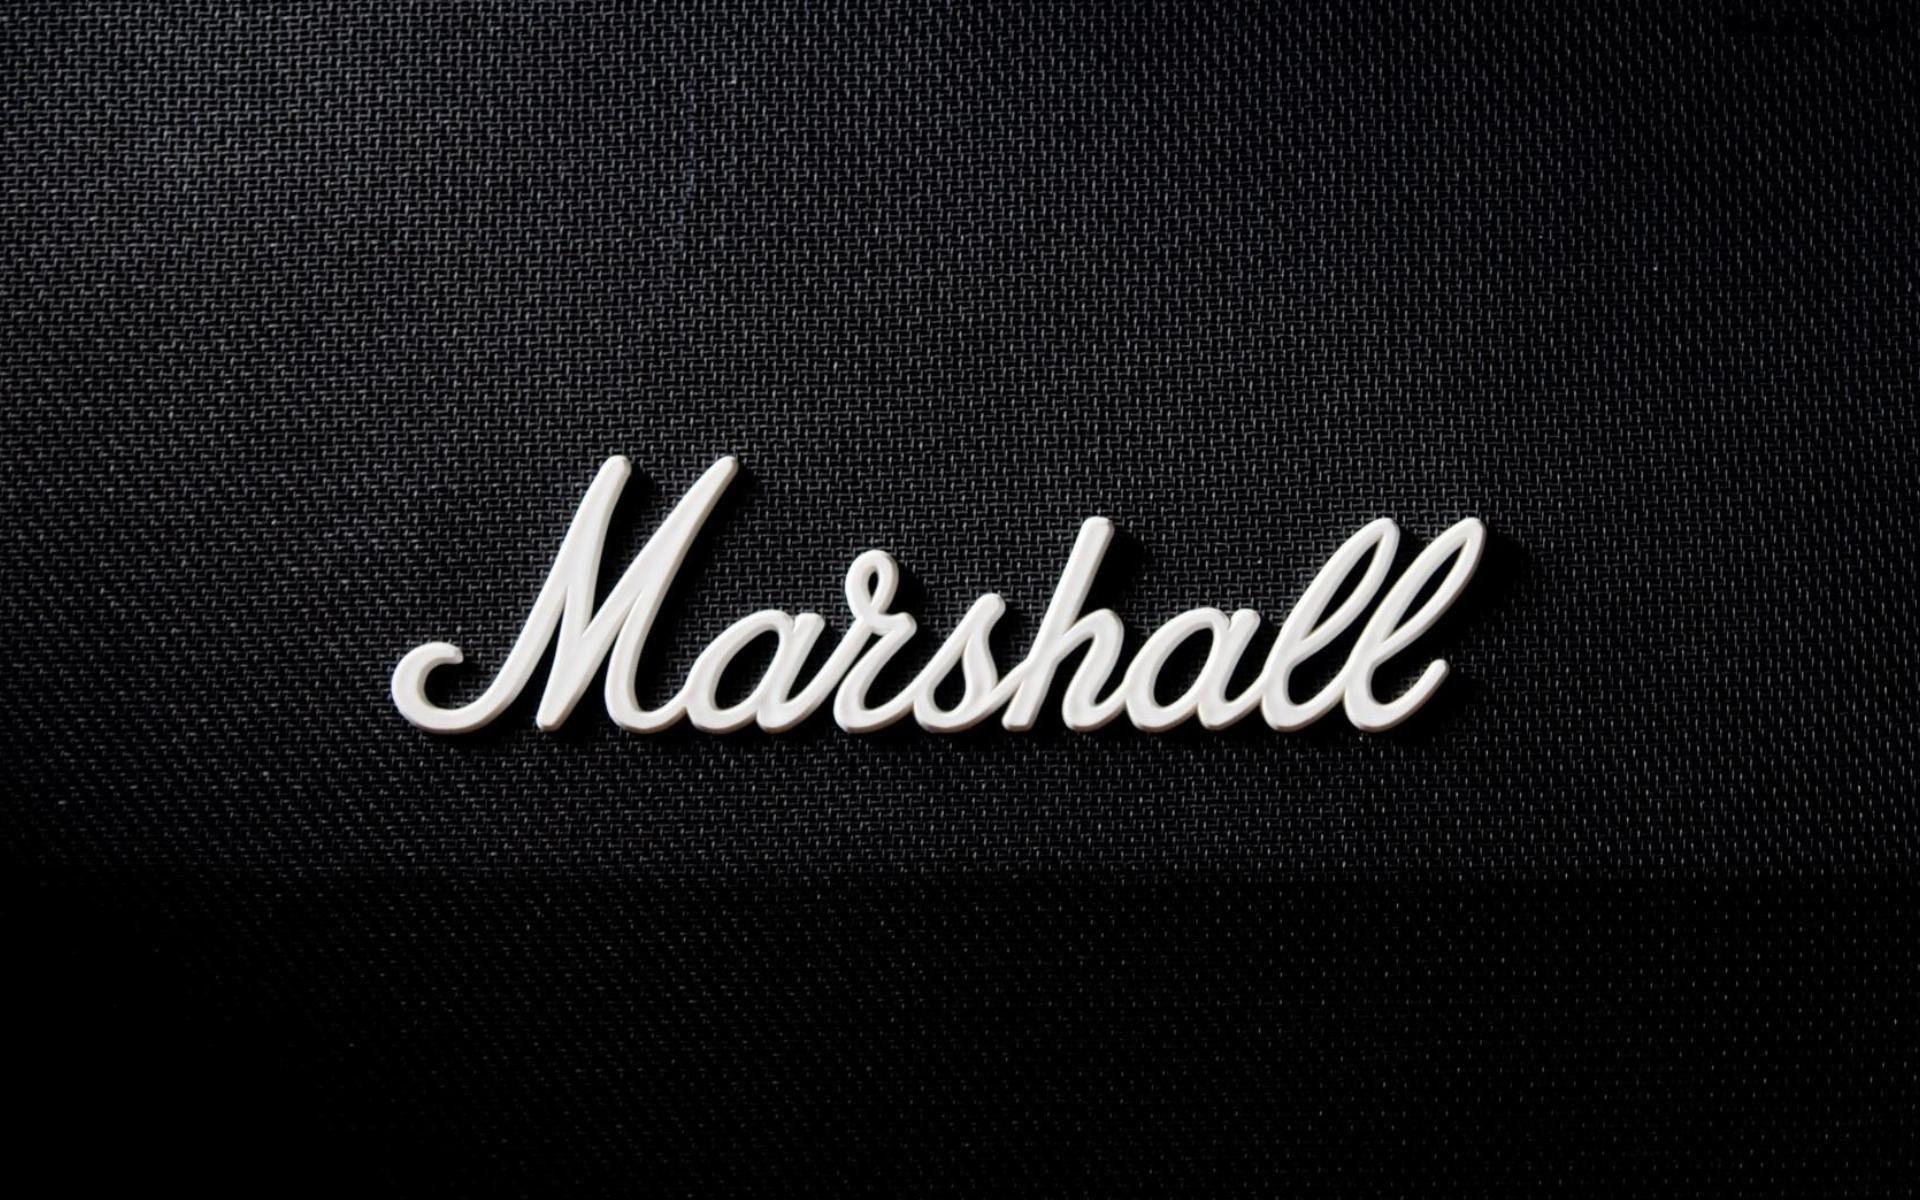 Marshall Micro Apple Mac Desktop Wallpaper HD Amp Classic